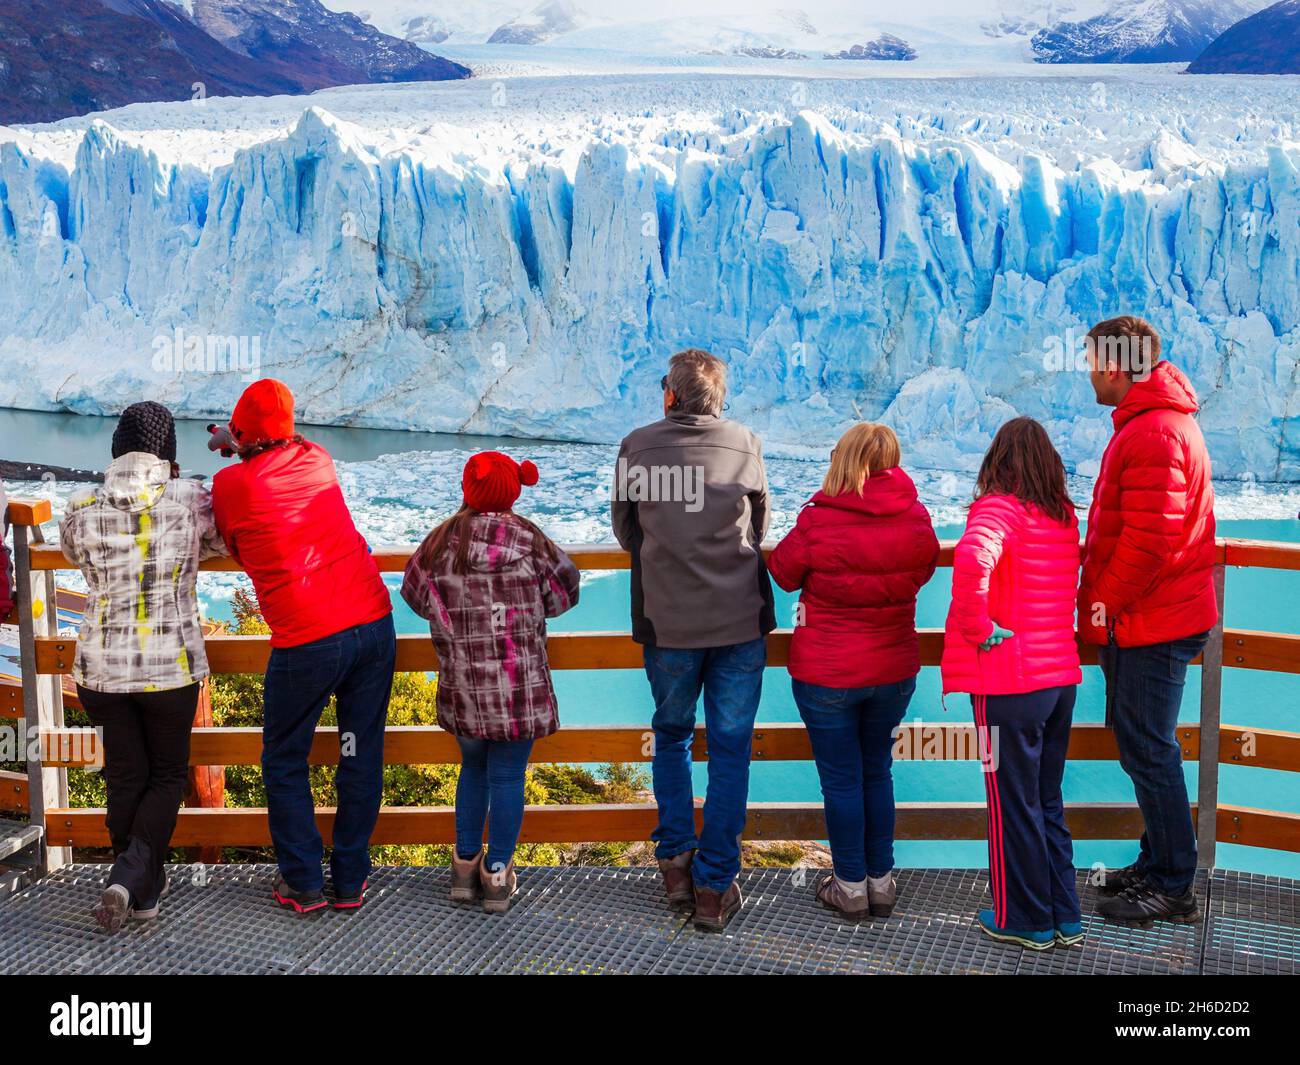 EL CALAFATE, ARGENTINIEN - 21. APRIL 2016: Nicht identifizierte Touristen in der Nähe des Perito-Moreno-Gletschers. Perito Moreno ist ein Gletscher im Los Glaciares Nationa Stockfoto